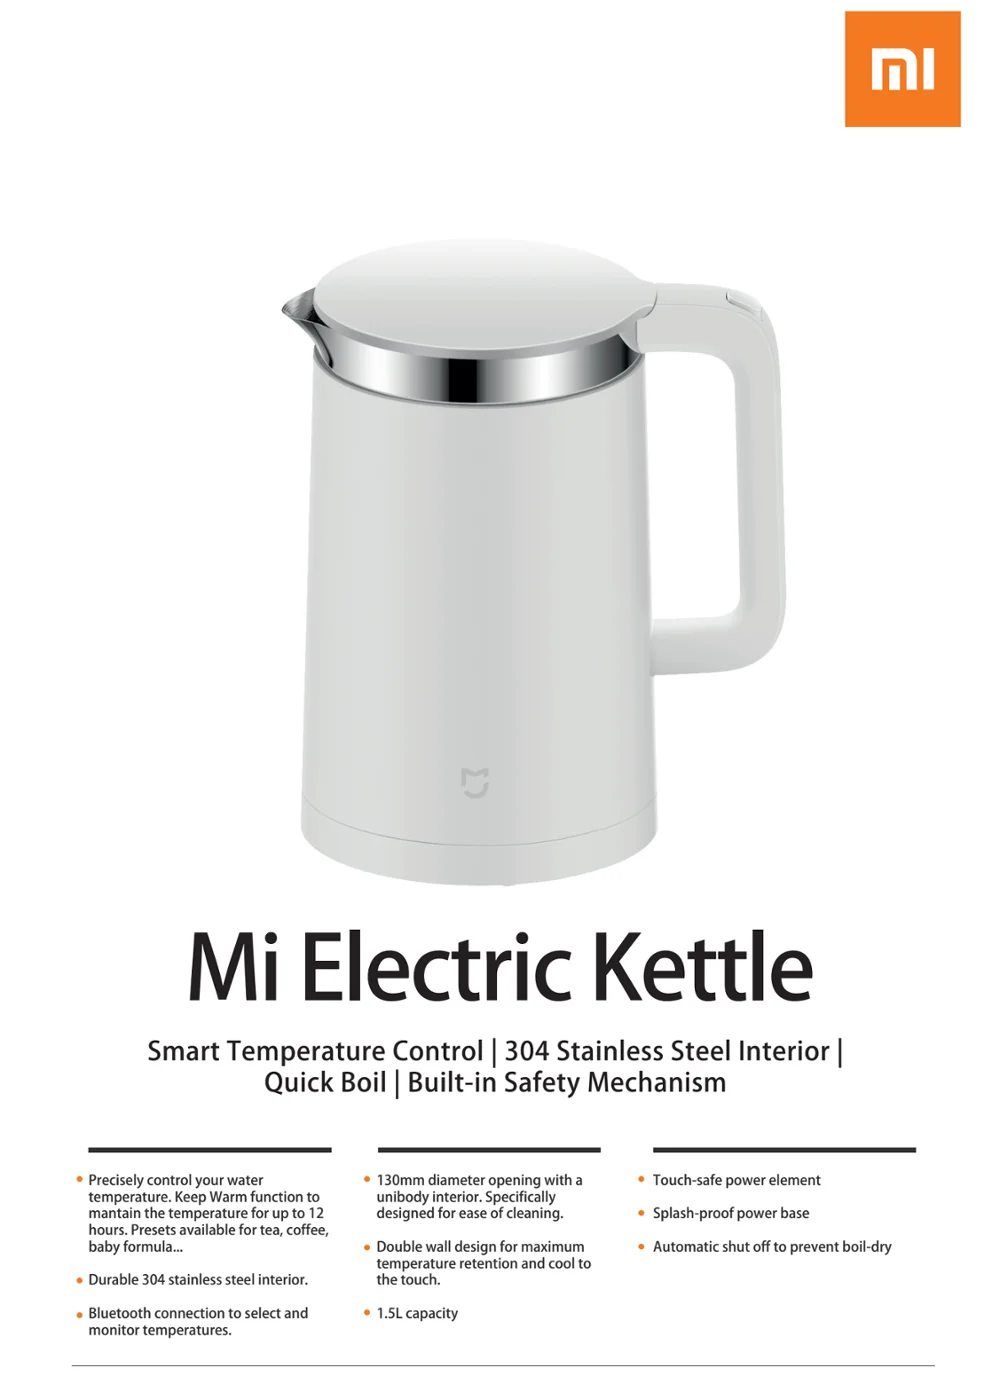 xiaomi mijia 1.5 l electric water kettle